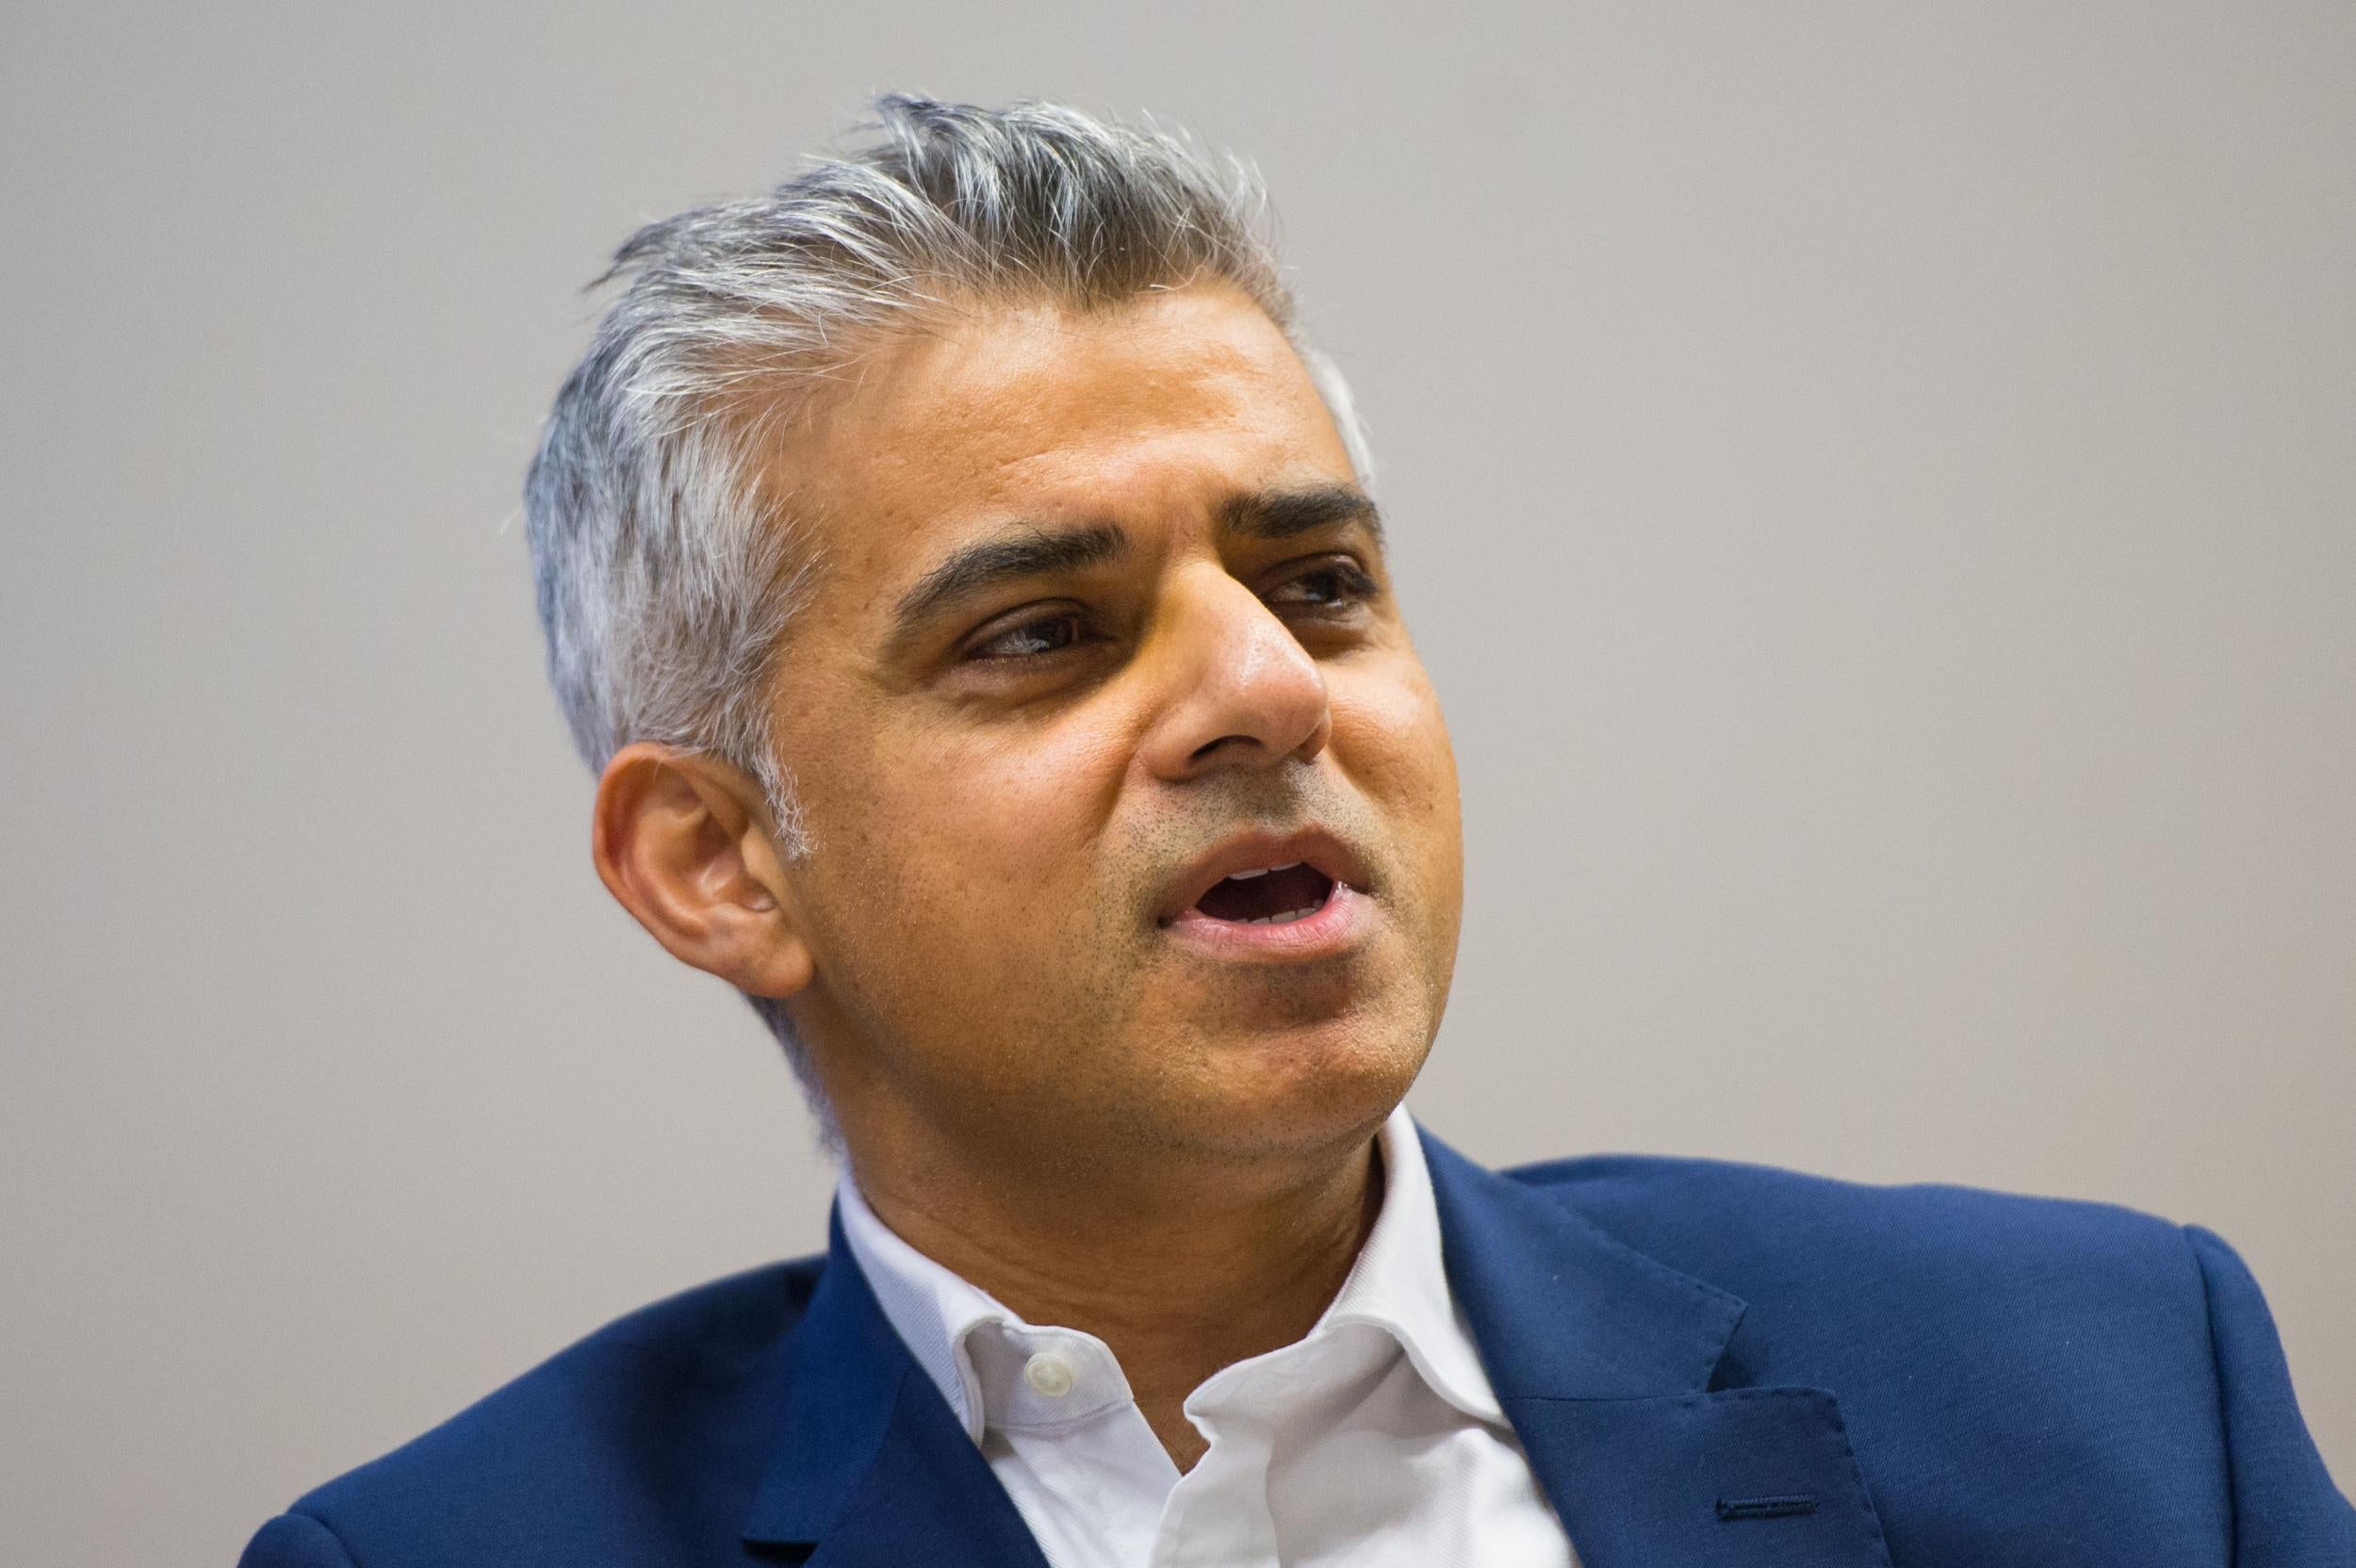 Mayor of London Sadiq Khan was elected in May